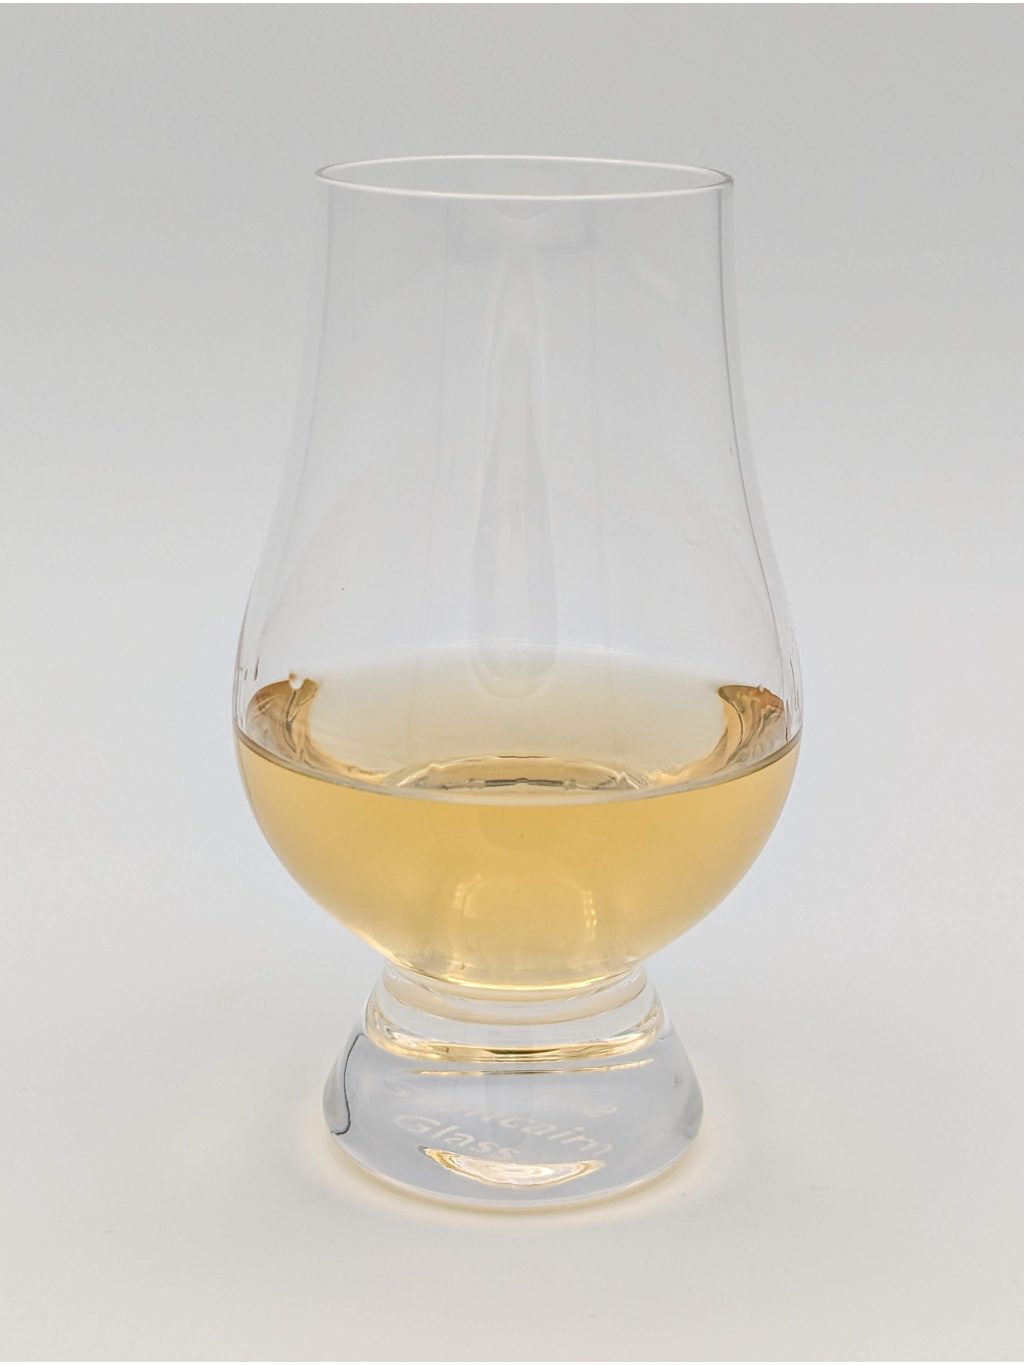 Light Gold Liquid in a Glencairn glass